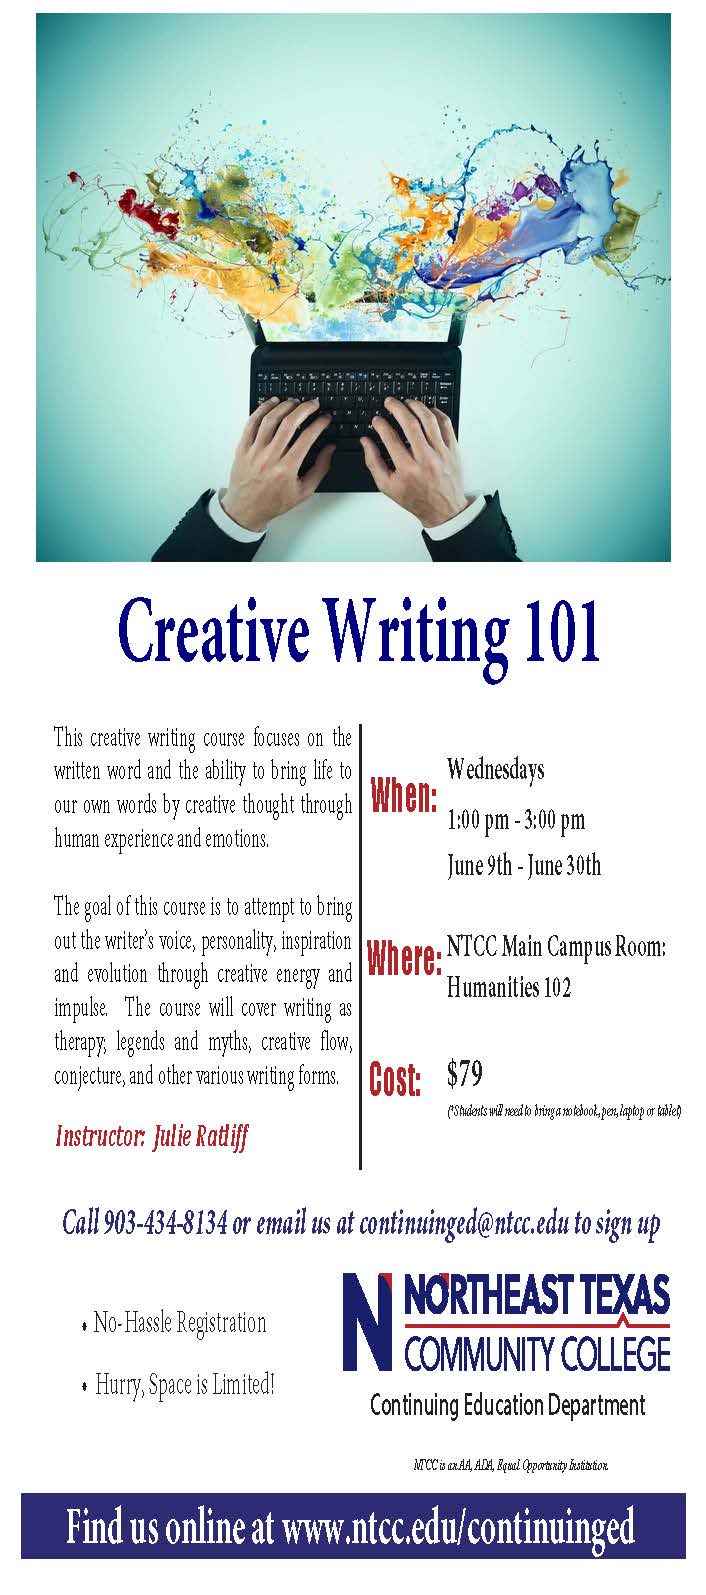 Creative Writing 101 Northeast Texas Community College